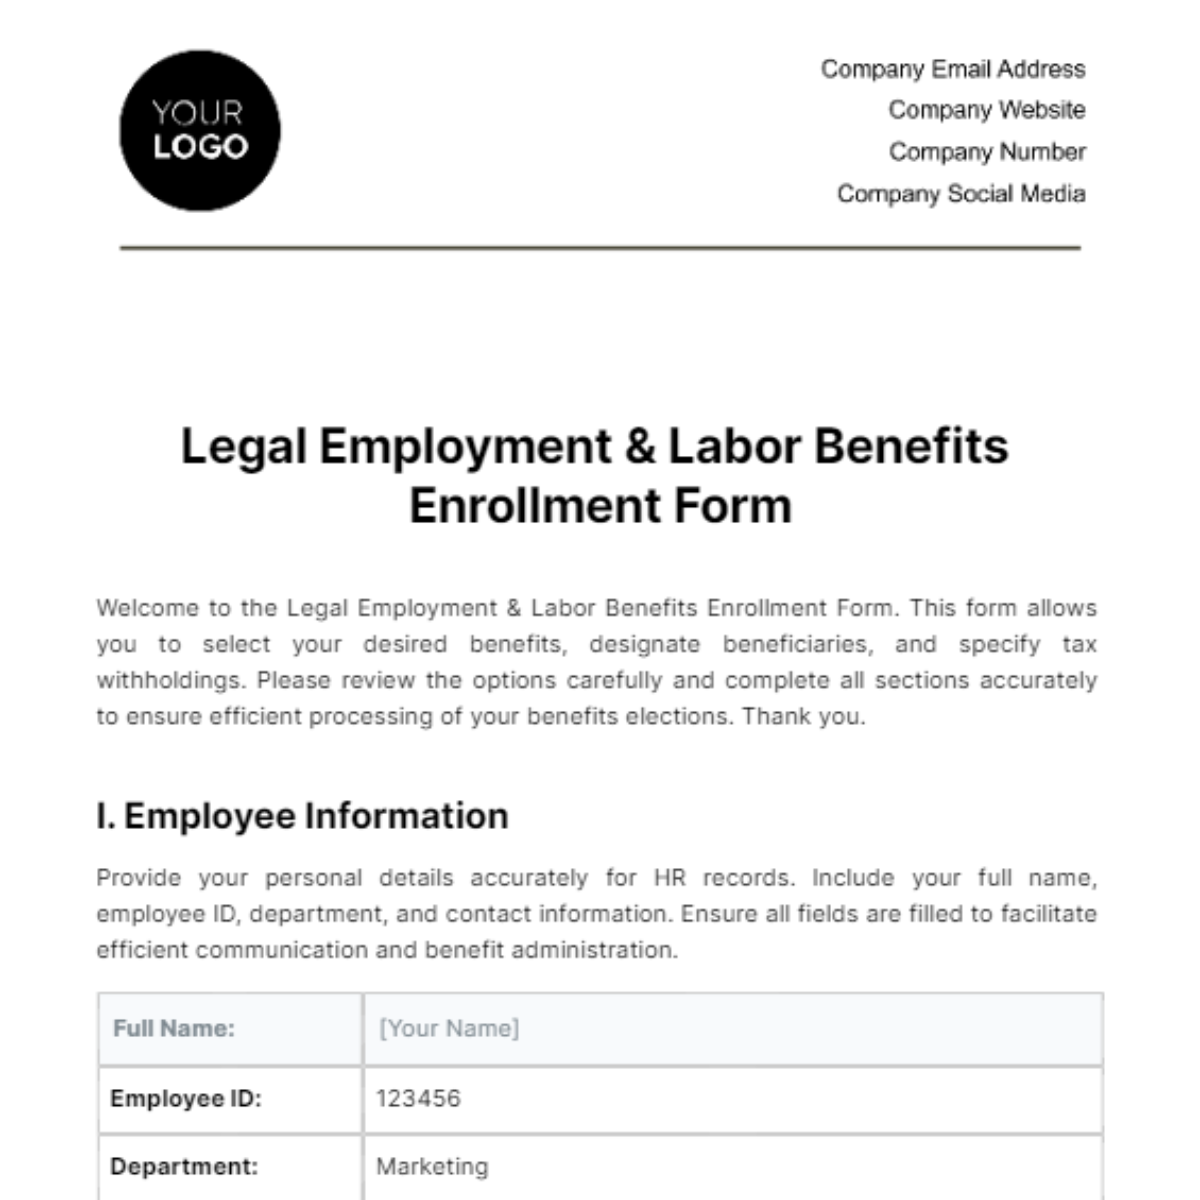 Legal Employment & Labor Benefits Enrollment Form Template